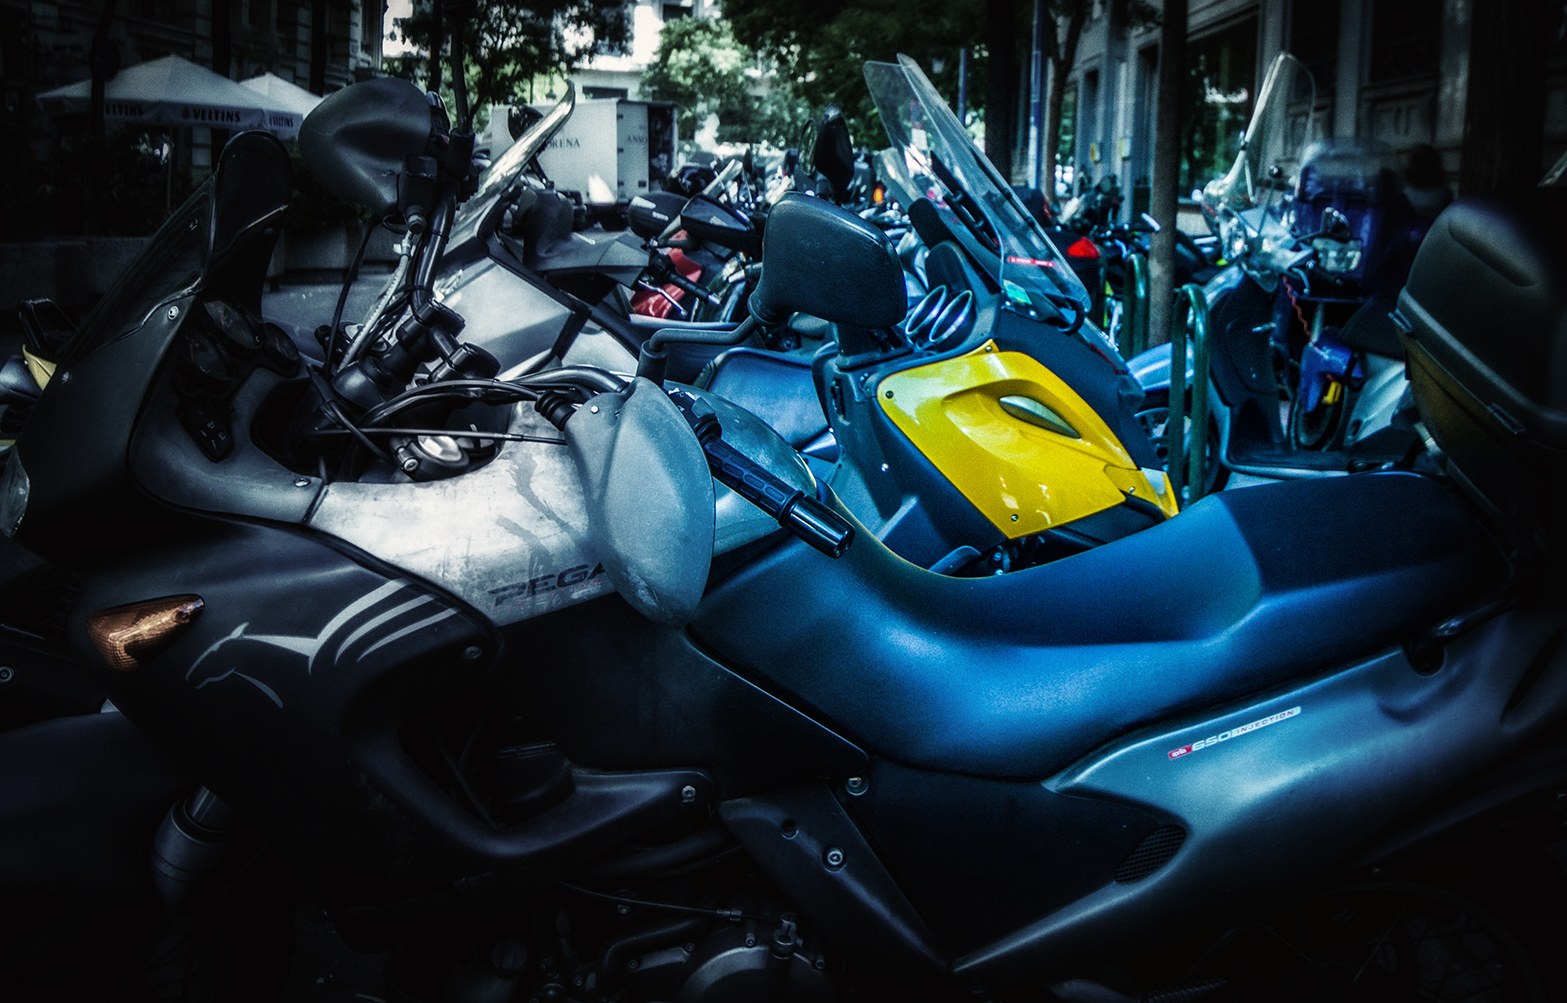 Parked Motorbikes, Madrid